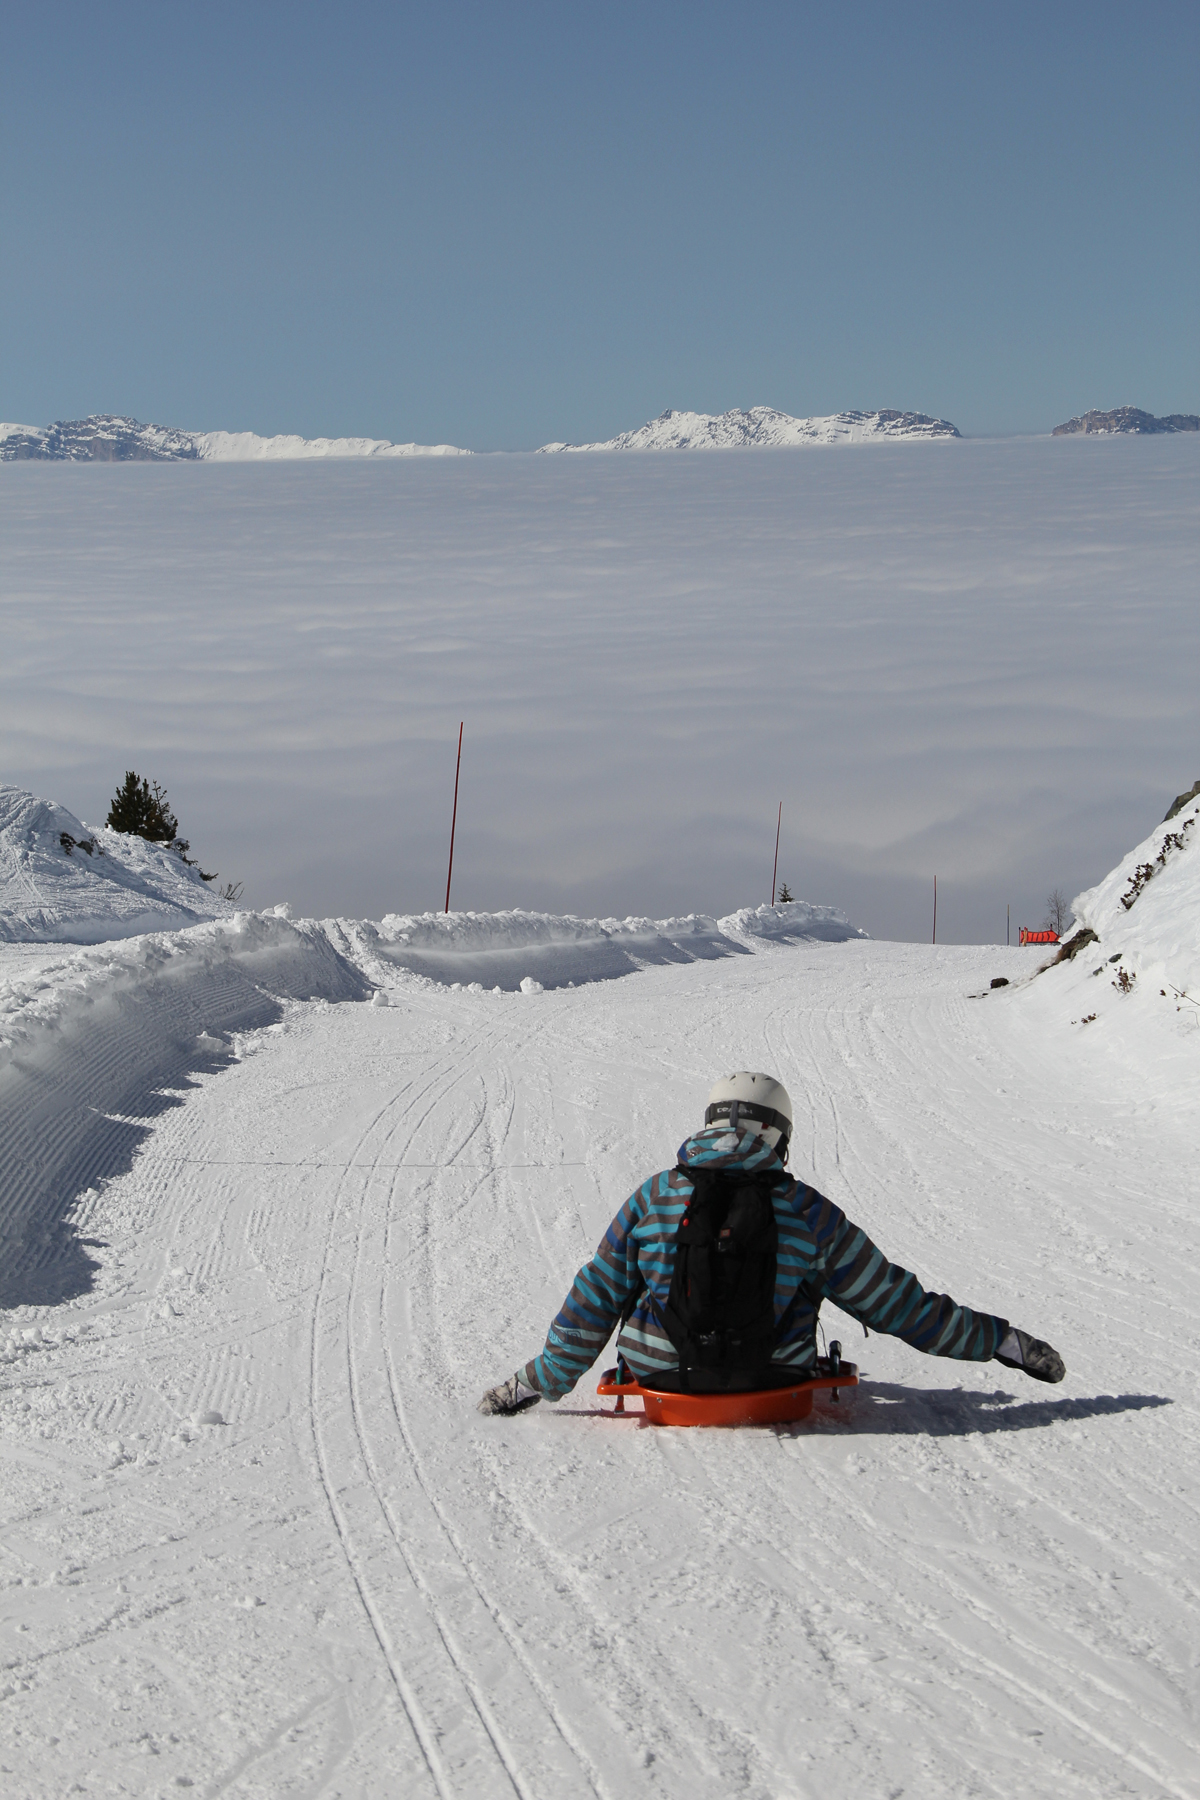 Chamrousse Sledging Park experience winter mountain ski resort isere french alps france - © MG - OT Chamrousse